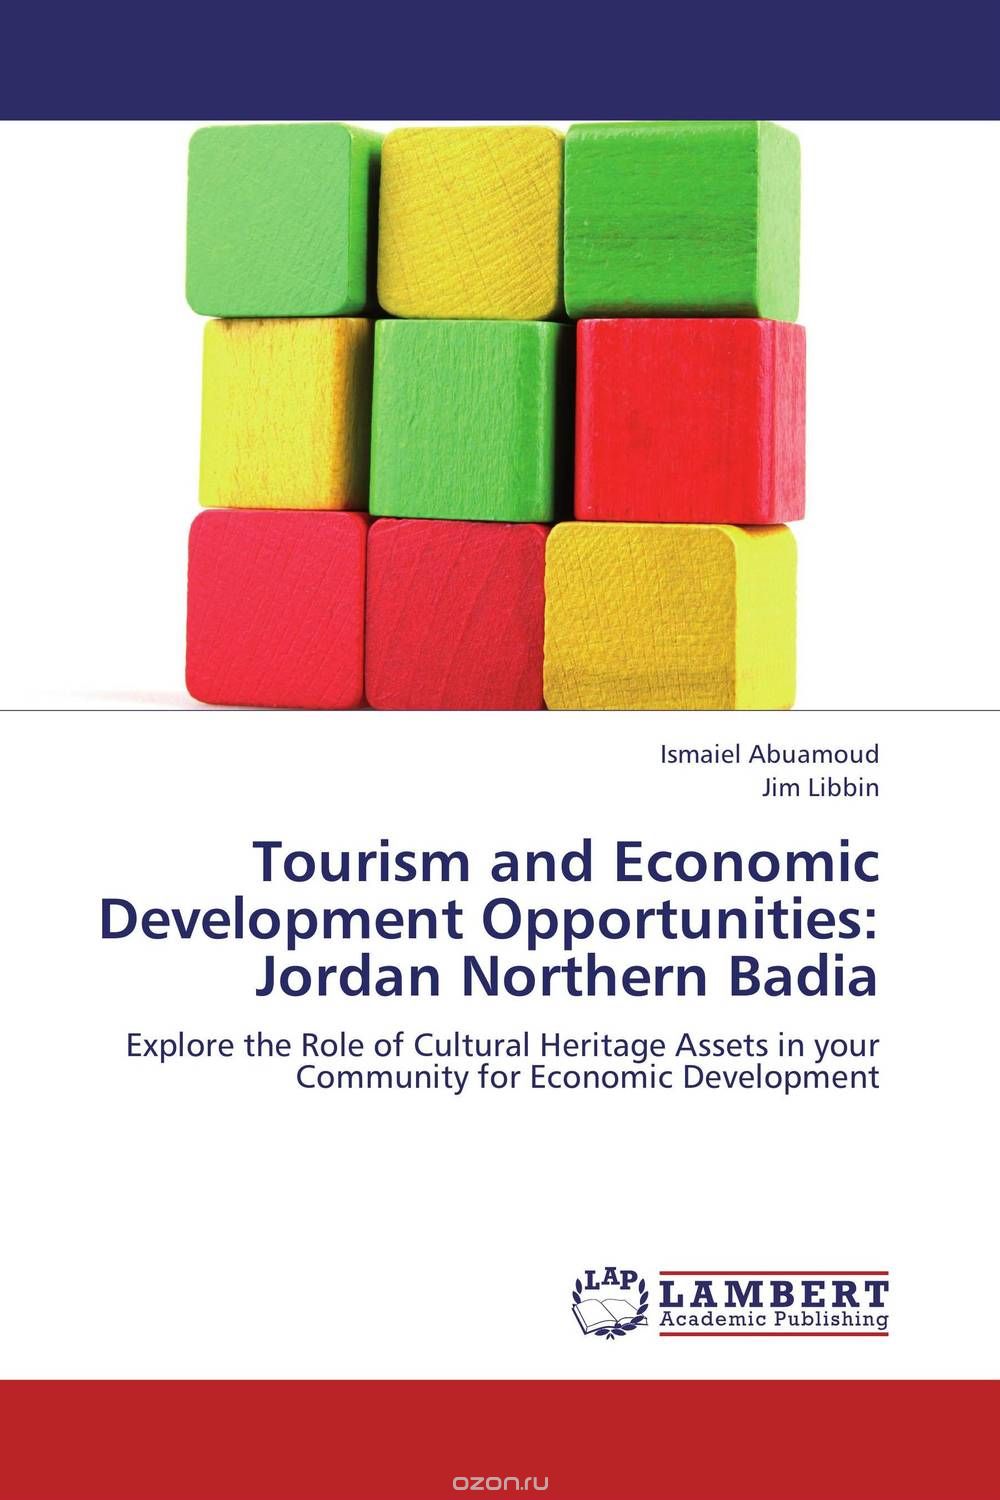 Tourism and Economic Development Opportunities: Jordan Northern Badia